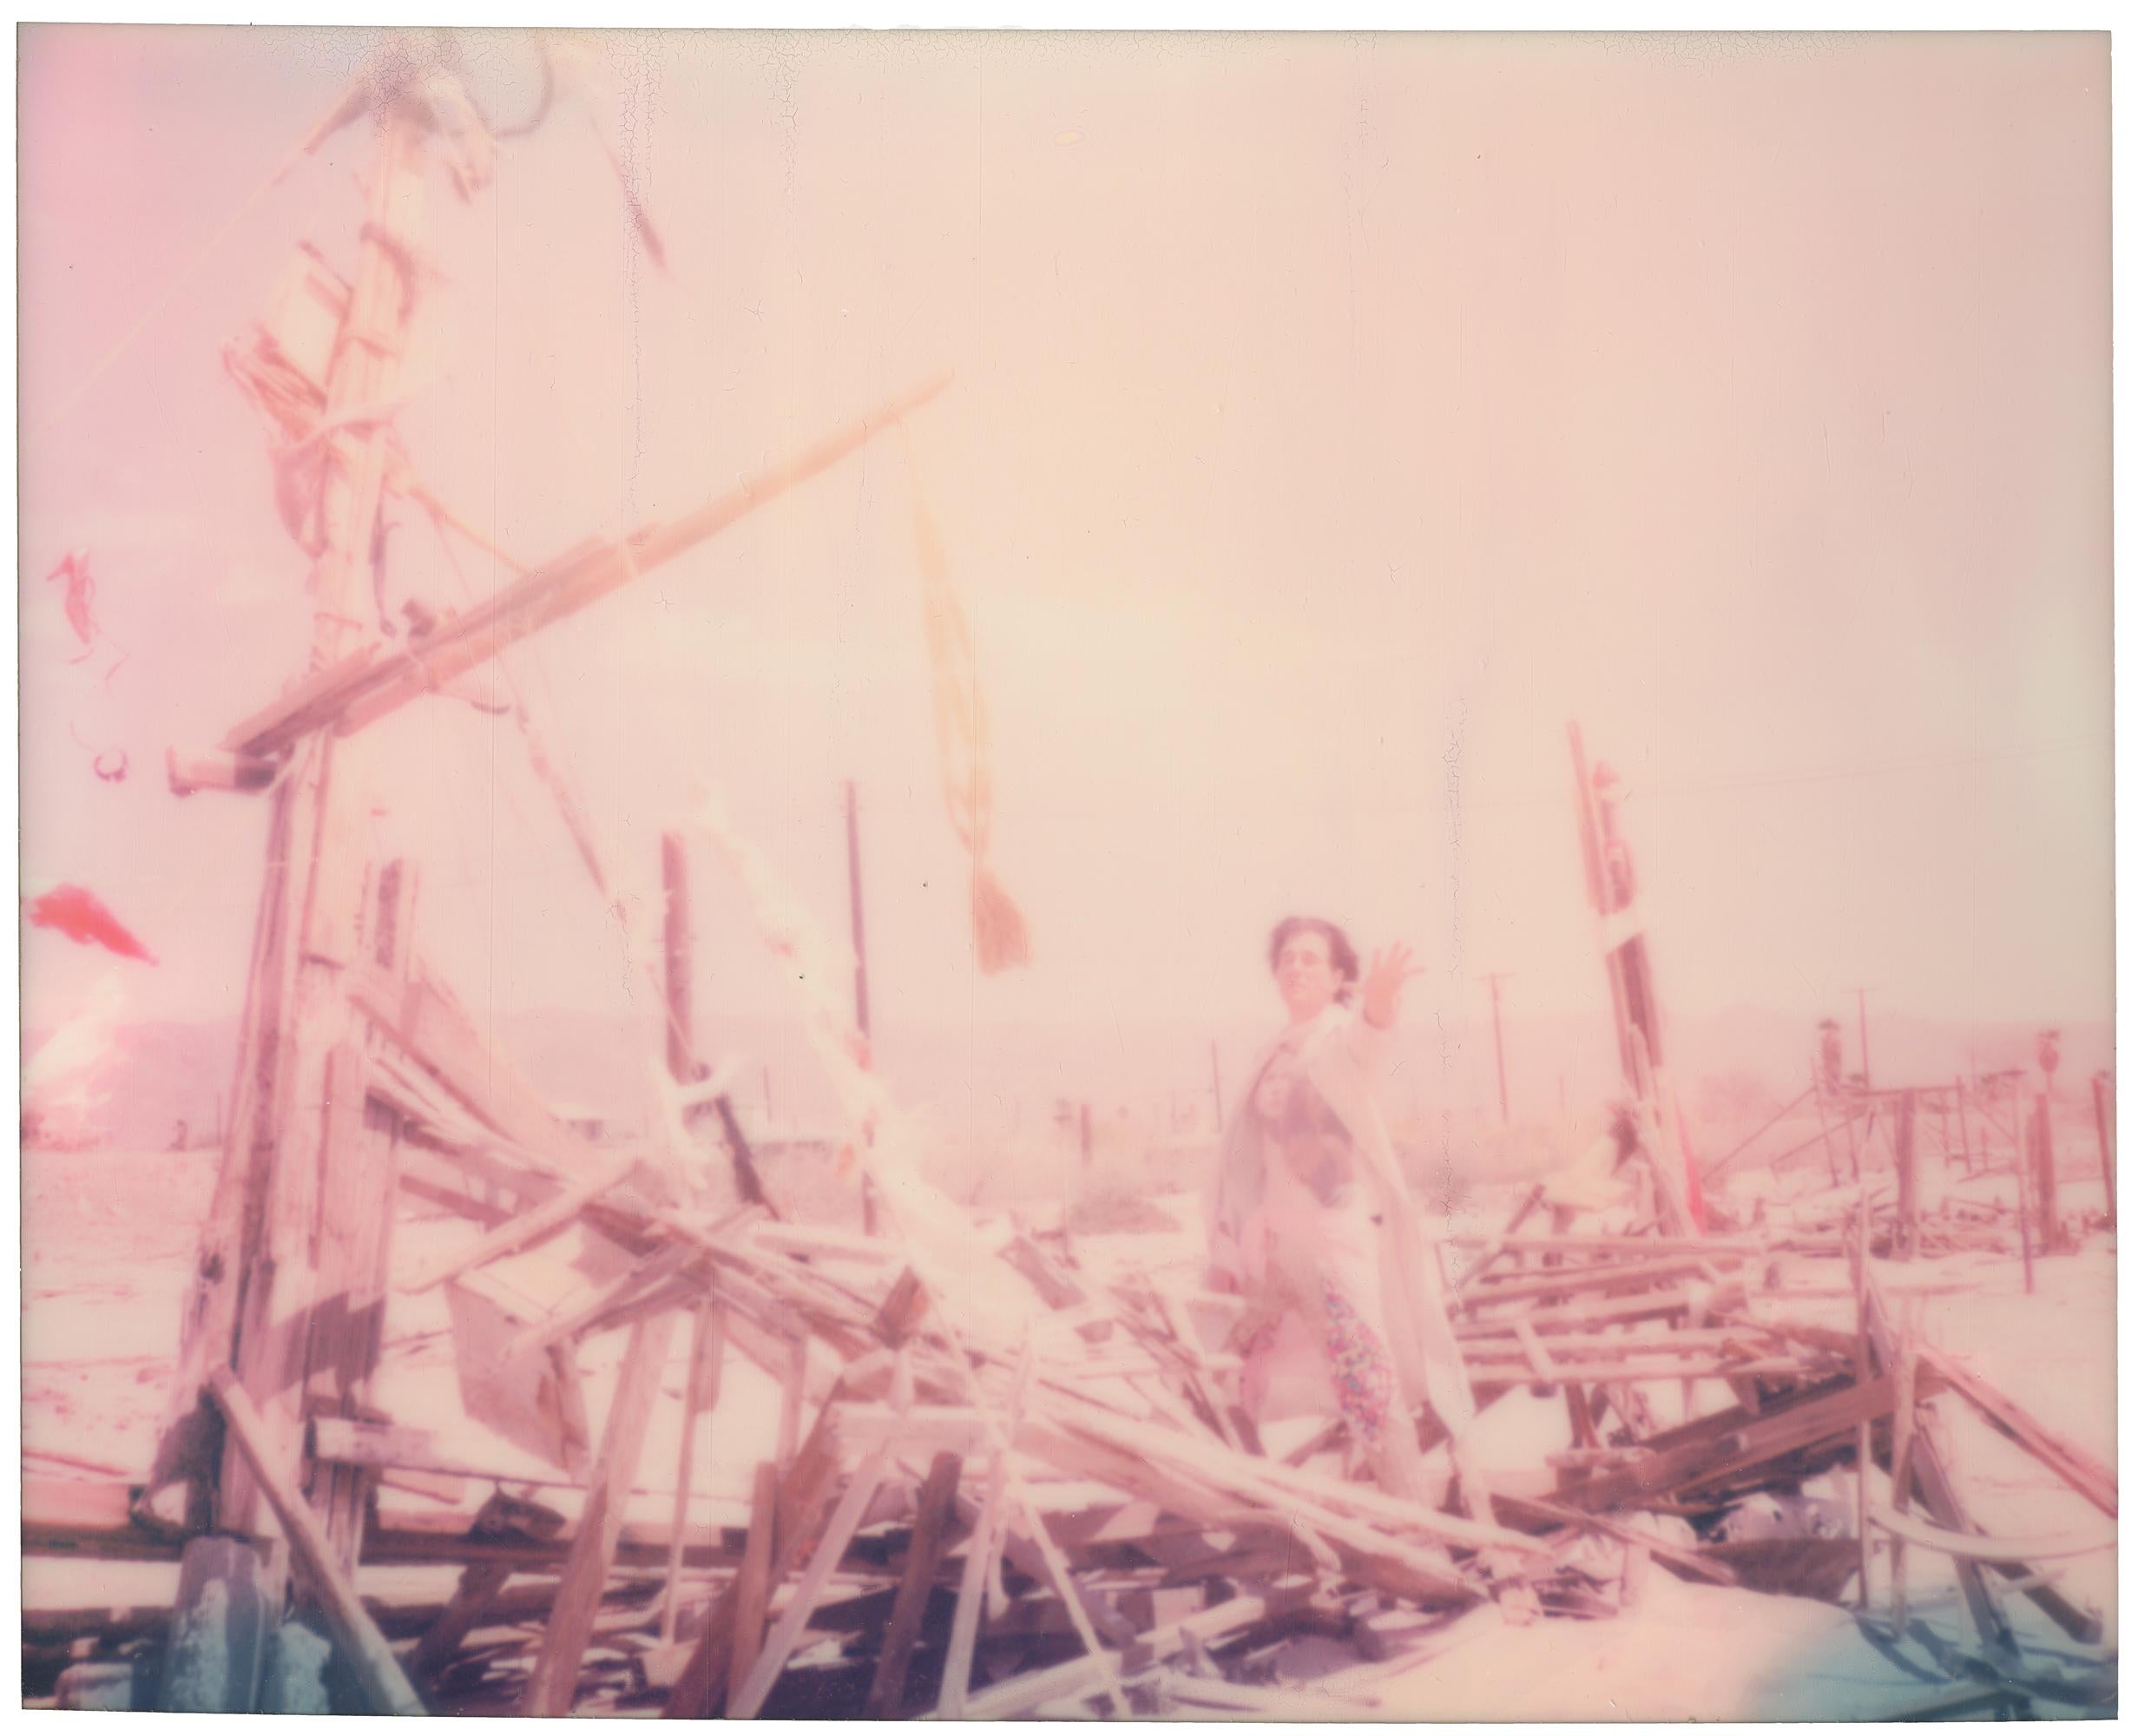 Stefanie Schneider Portrait Photograph - Bombay Beach Pirates (Ensign Broderick record Shoot 'Blood Crush') 